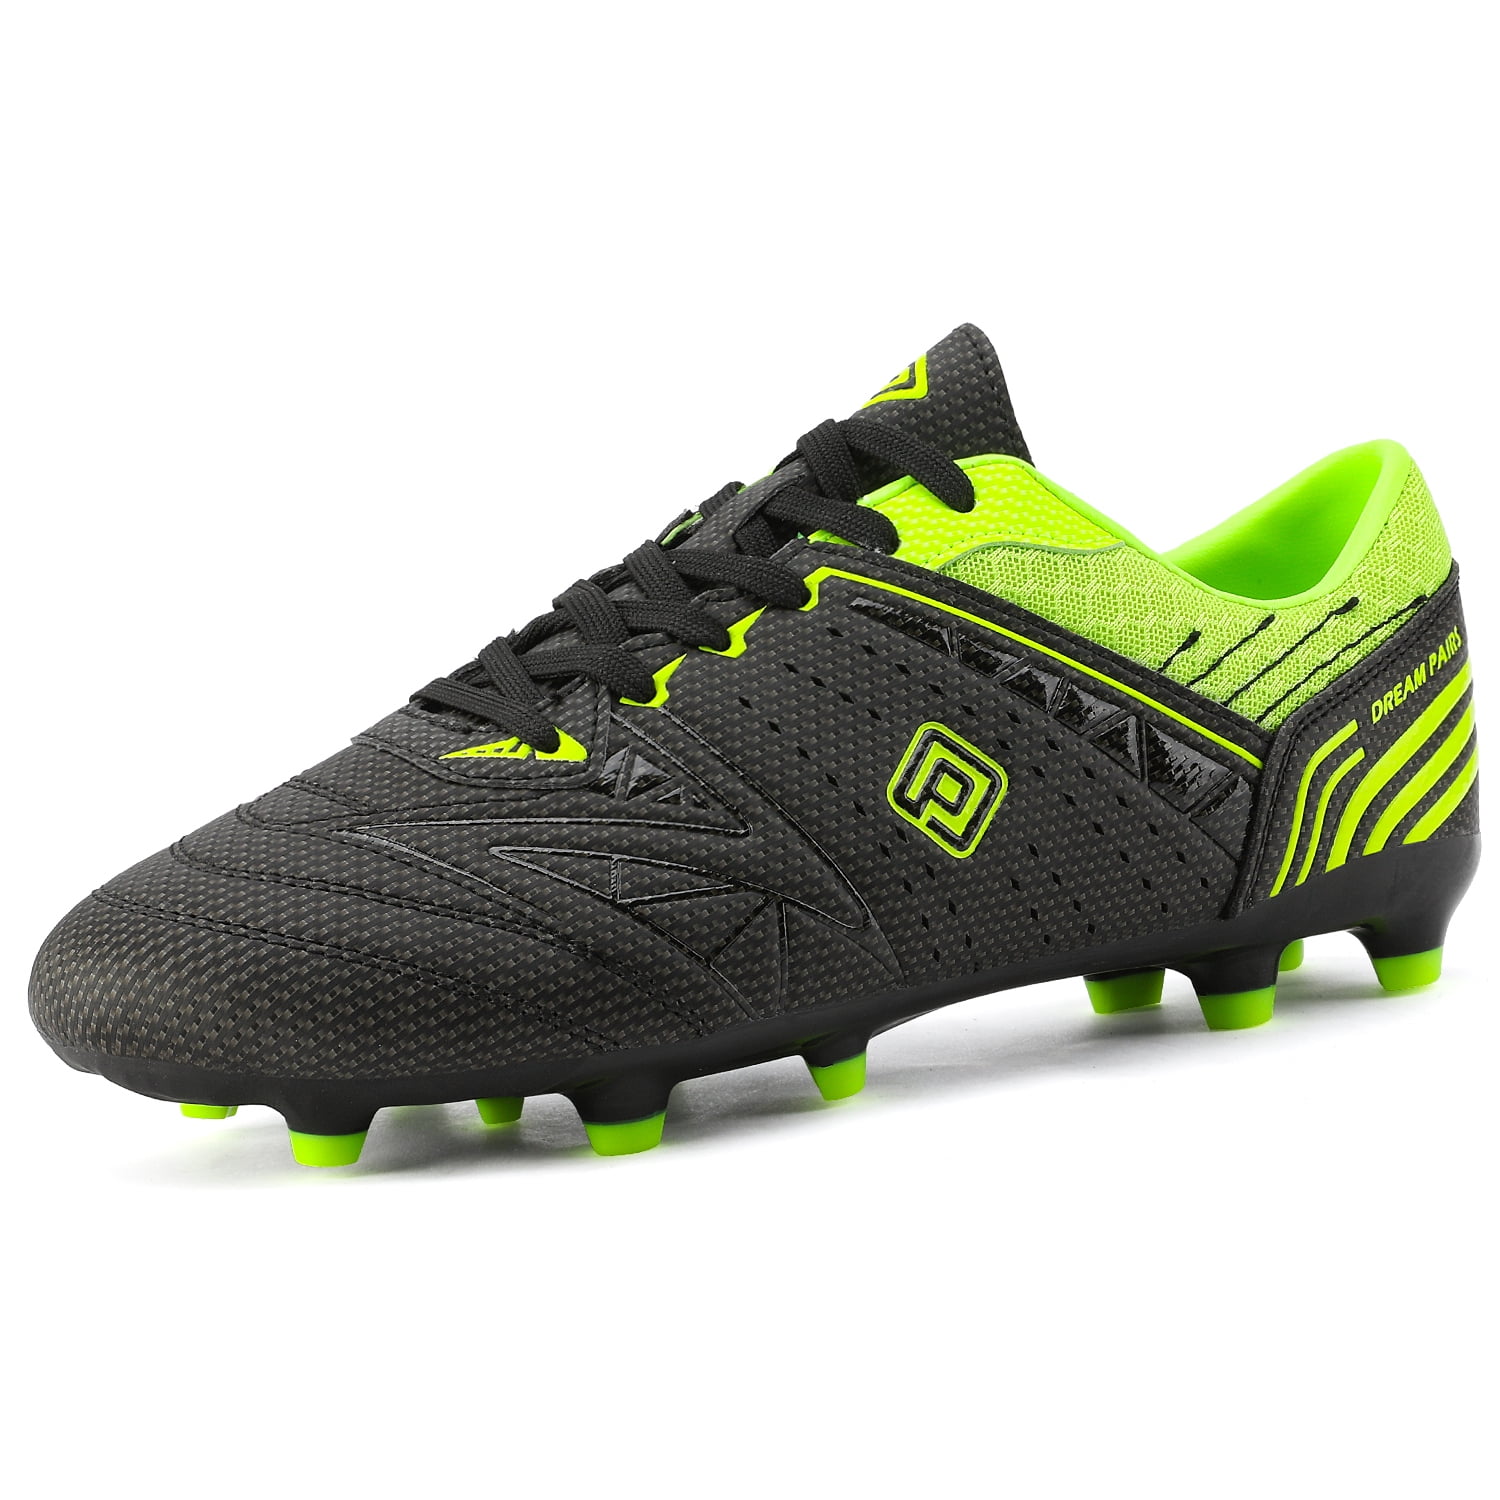 $100 New UMBRO ST 11 PREMIER HG Soccer Shoes Cleats Size Boys Size 5.5 